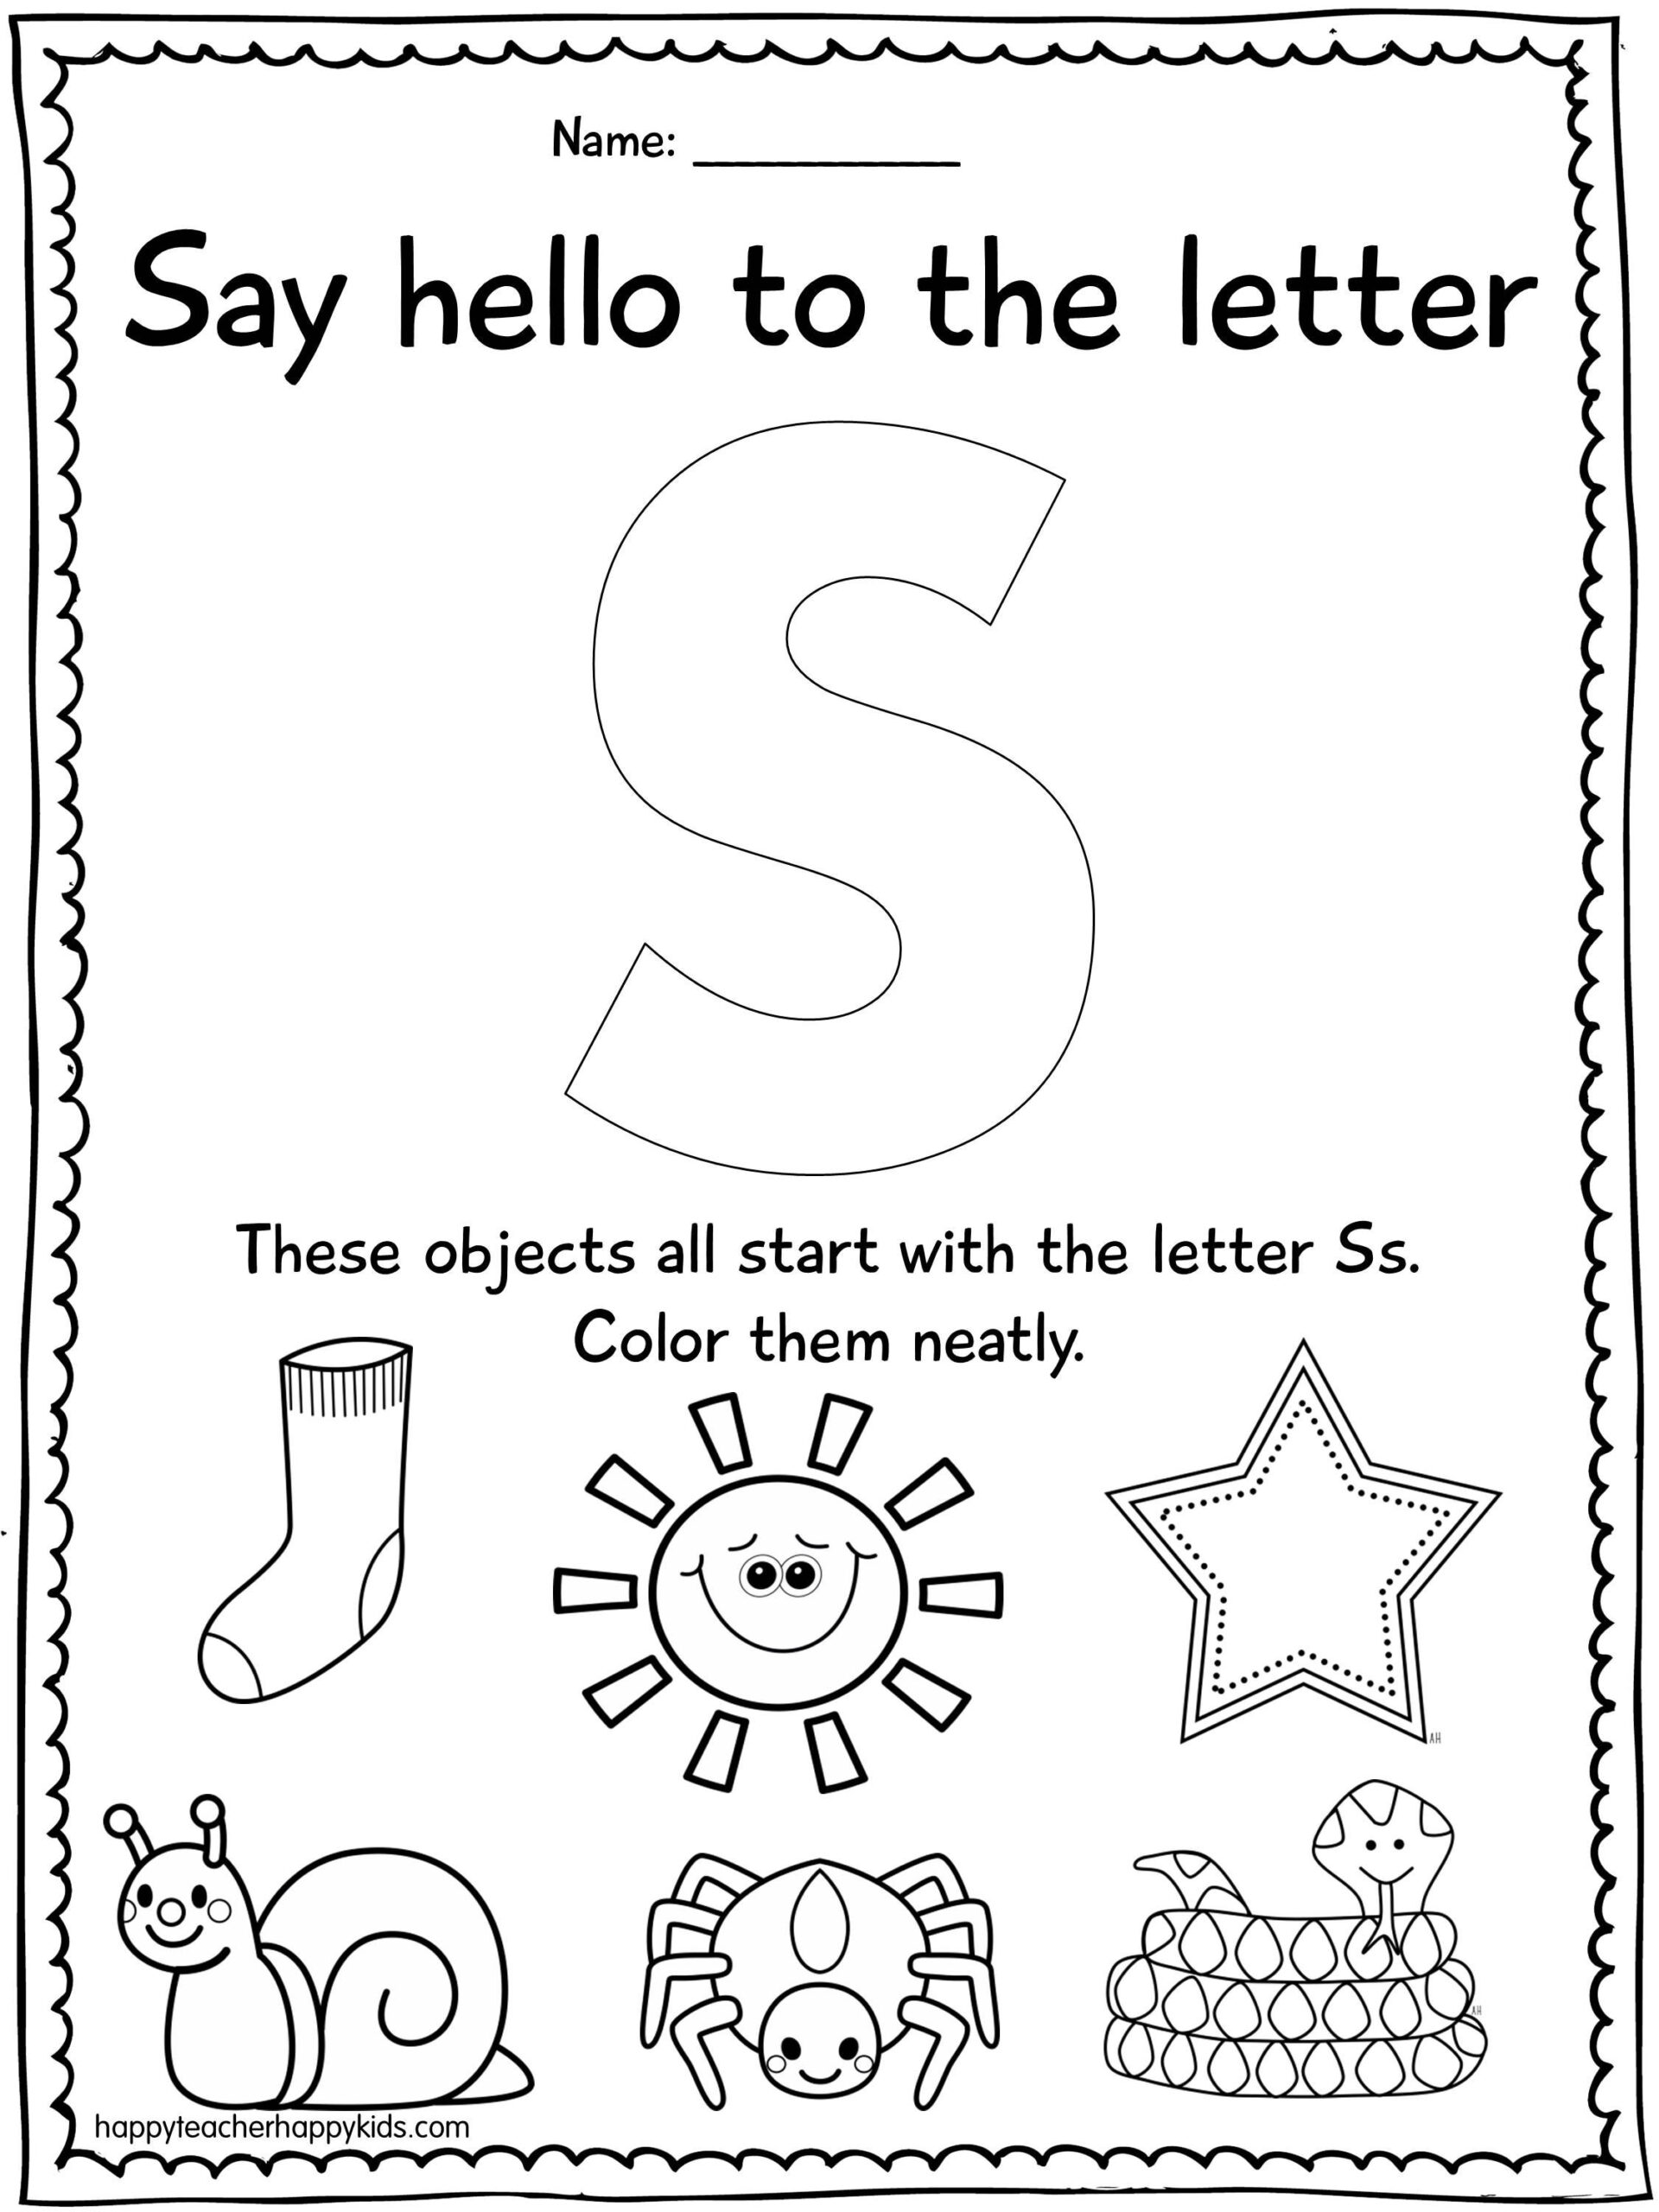 Letter S | Letter S Worksheets, Preschool Letters, Preschool pertaining to Letter S Worksheets For Kindergarten